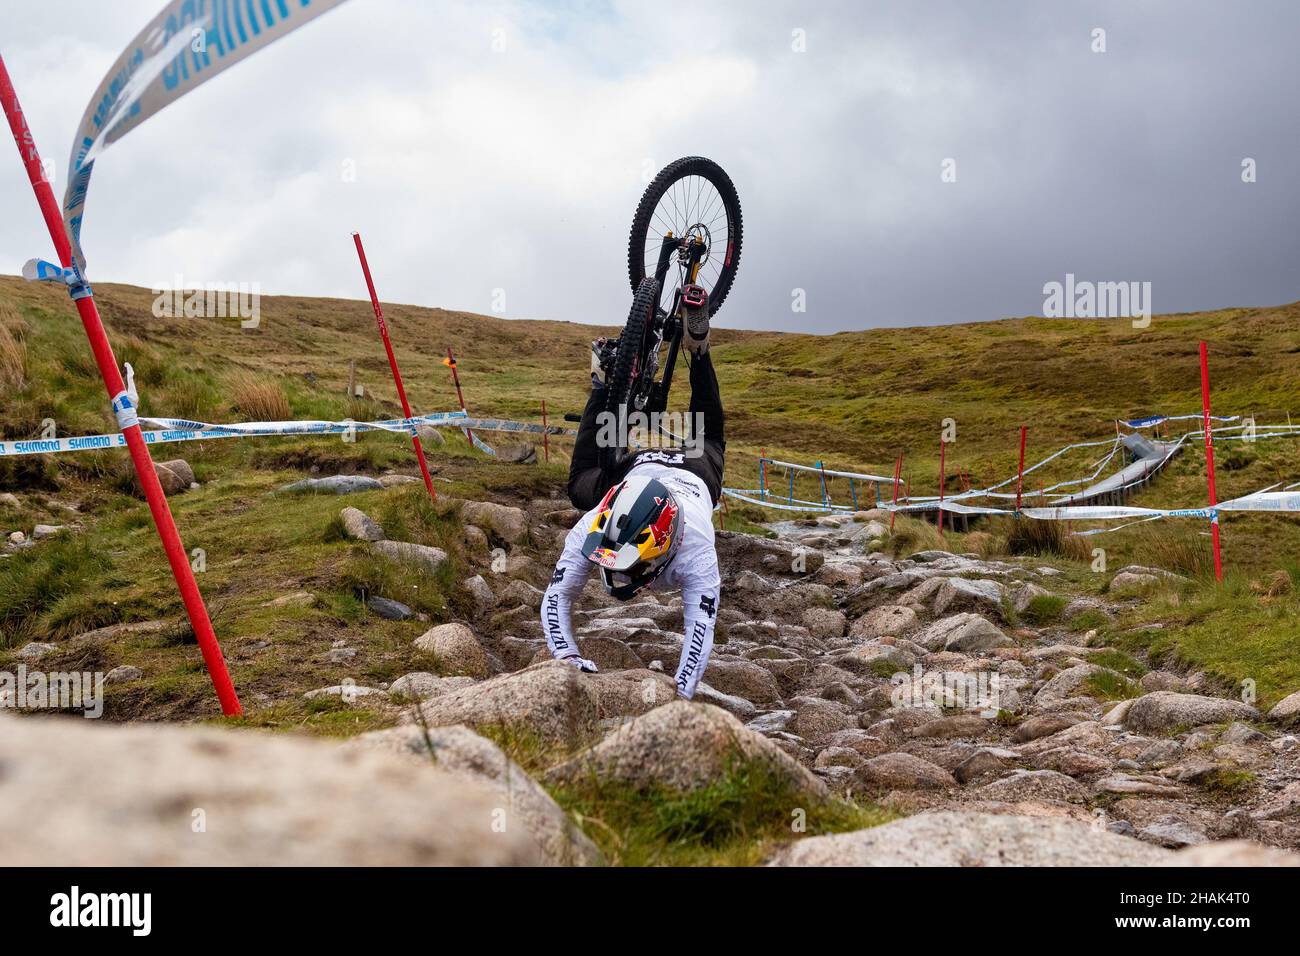 Discesa in mountain bike a Fort William Downhill World Cup 2019 - pilota:  Finn Iles Foto stock - Alamy